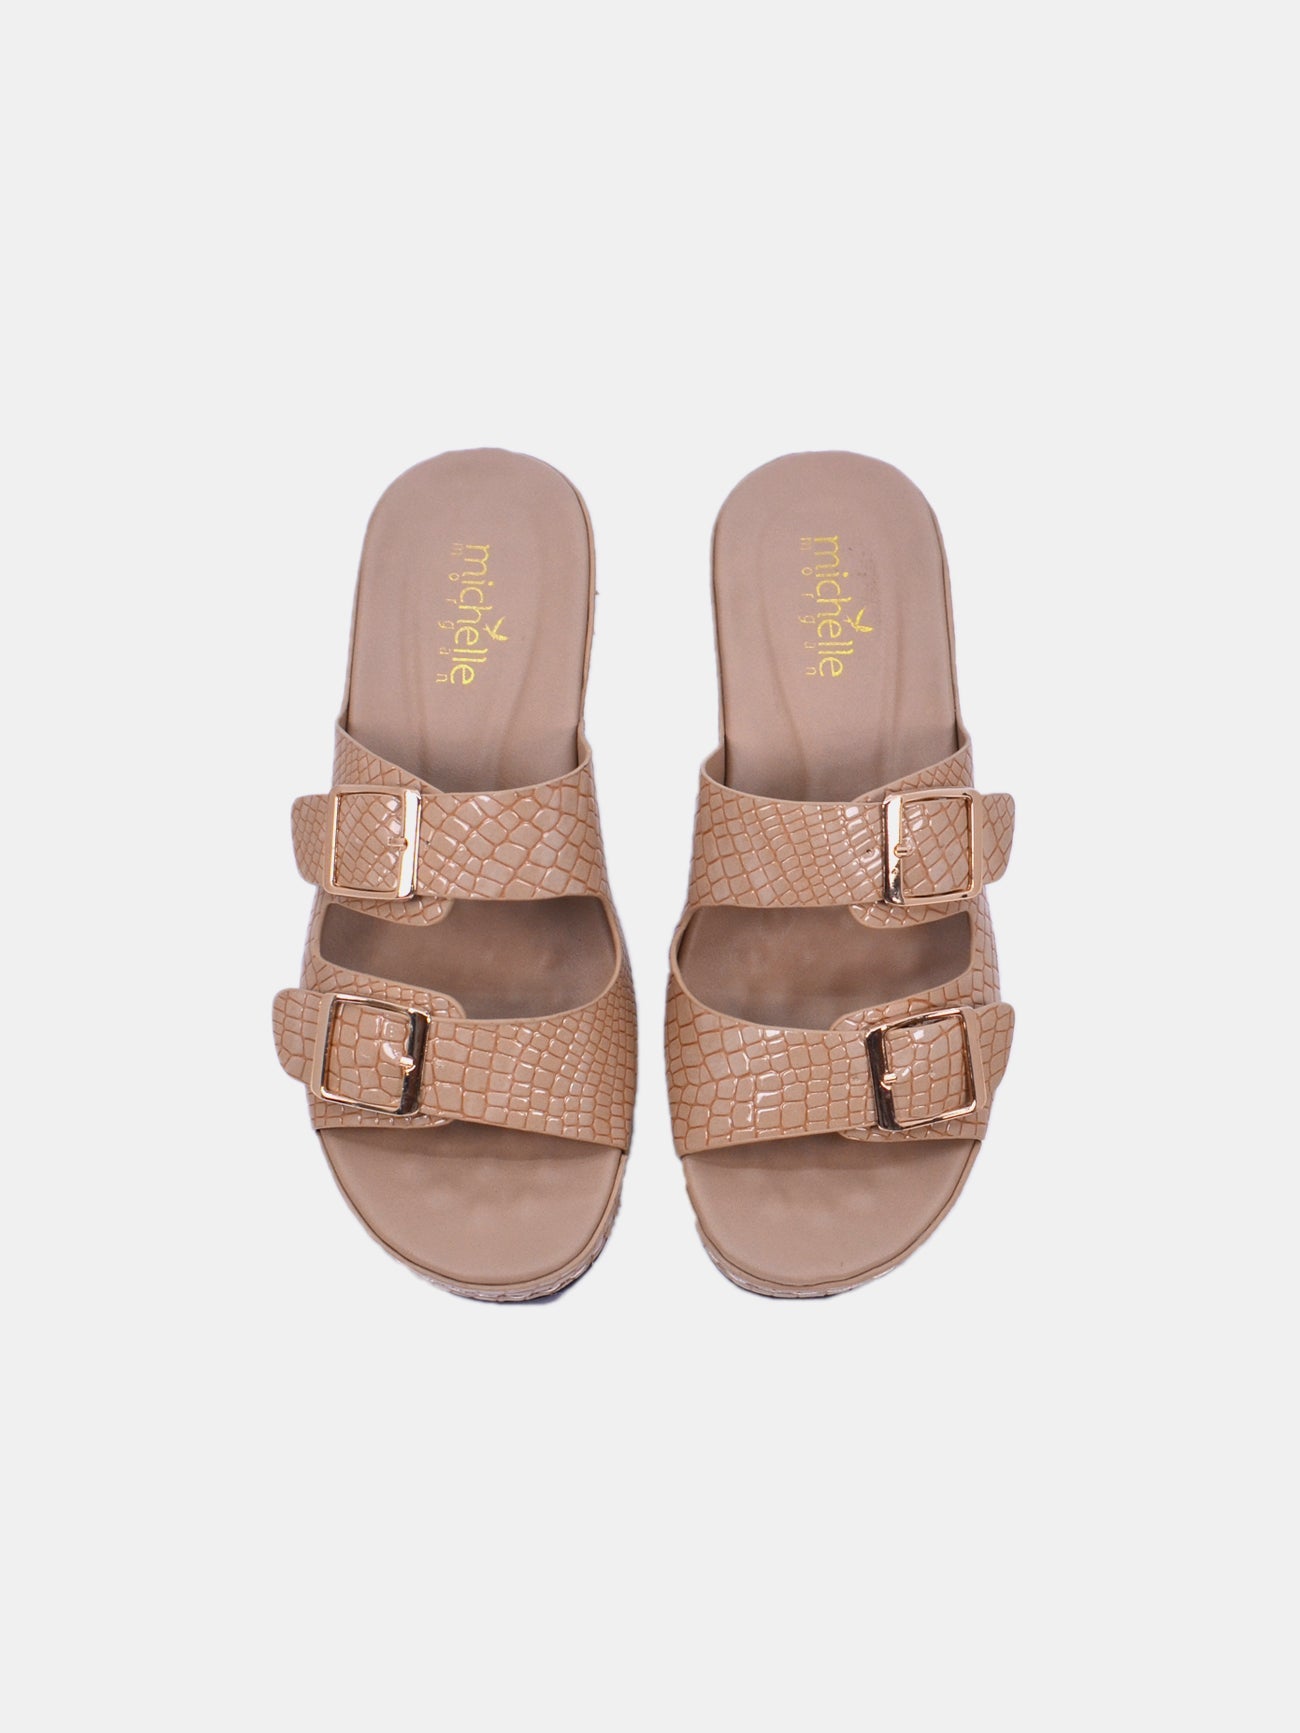 Michelle Morgan 314F7803 Women's Wedge Sandals #color_Beige